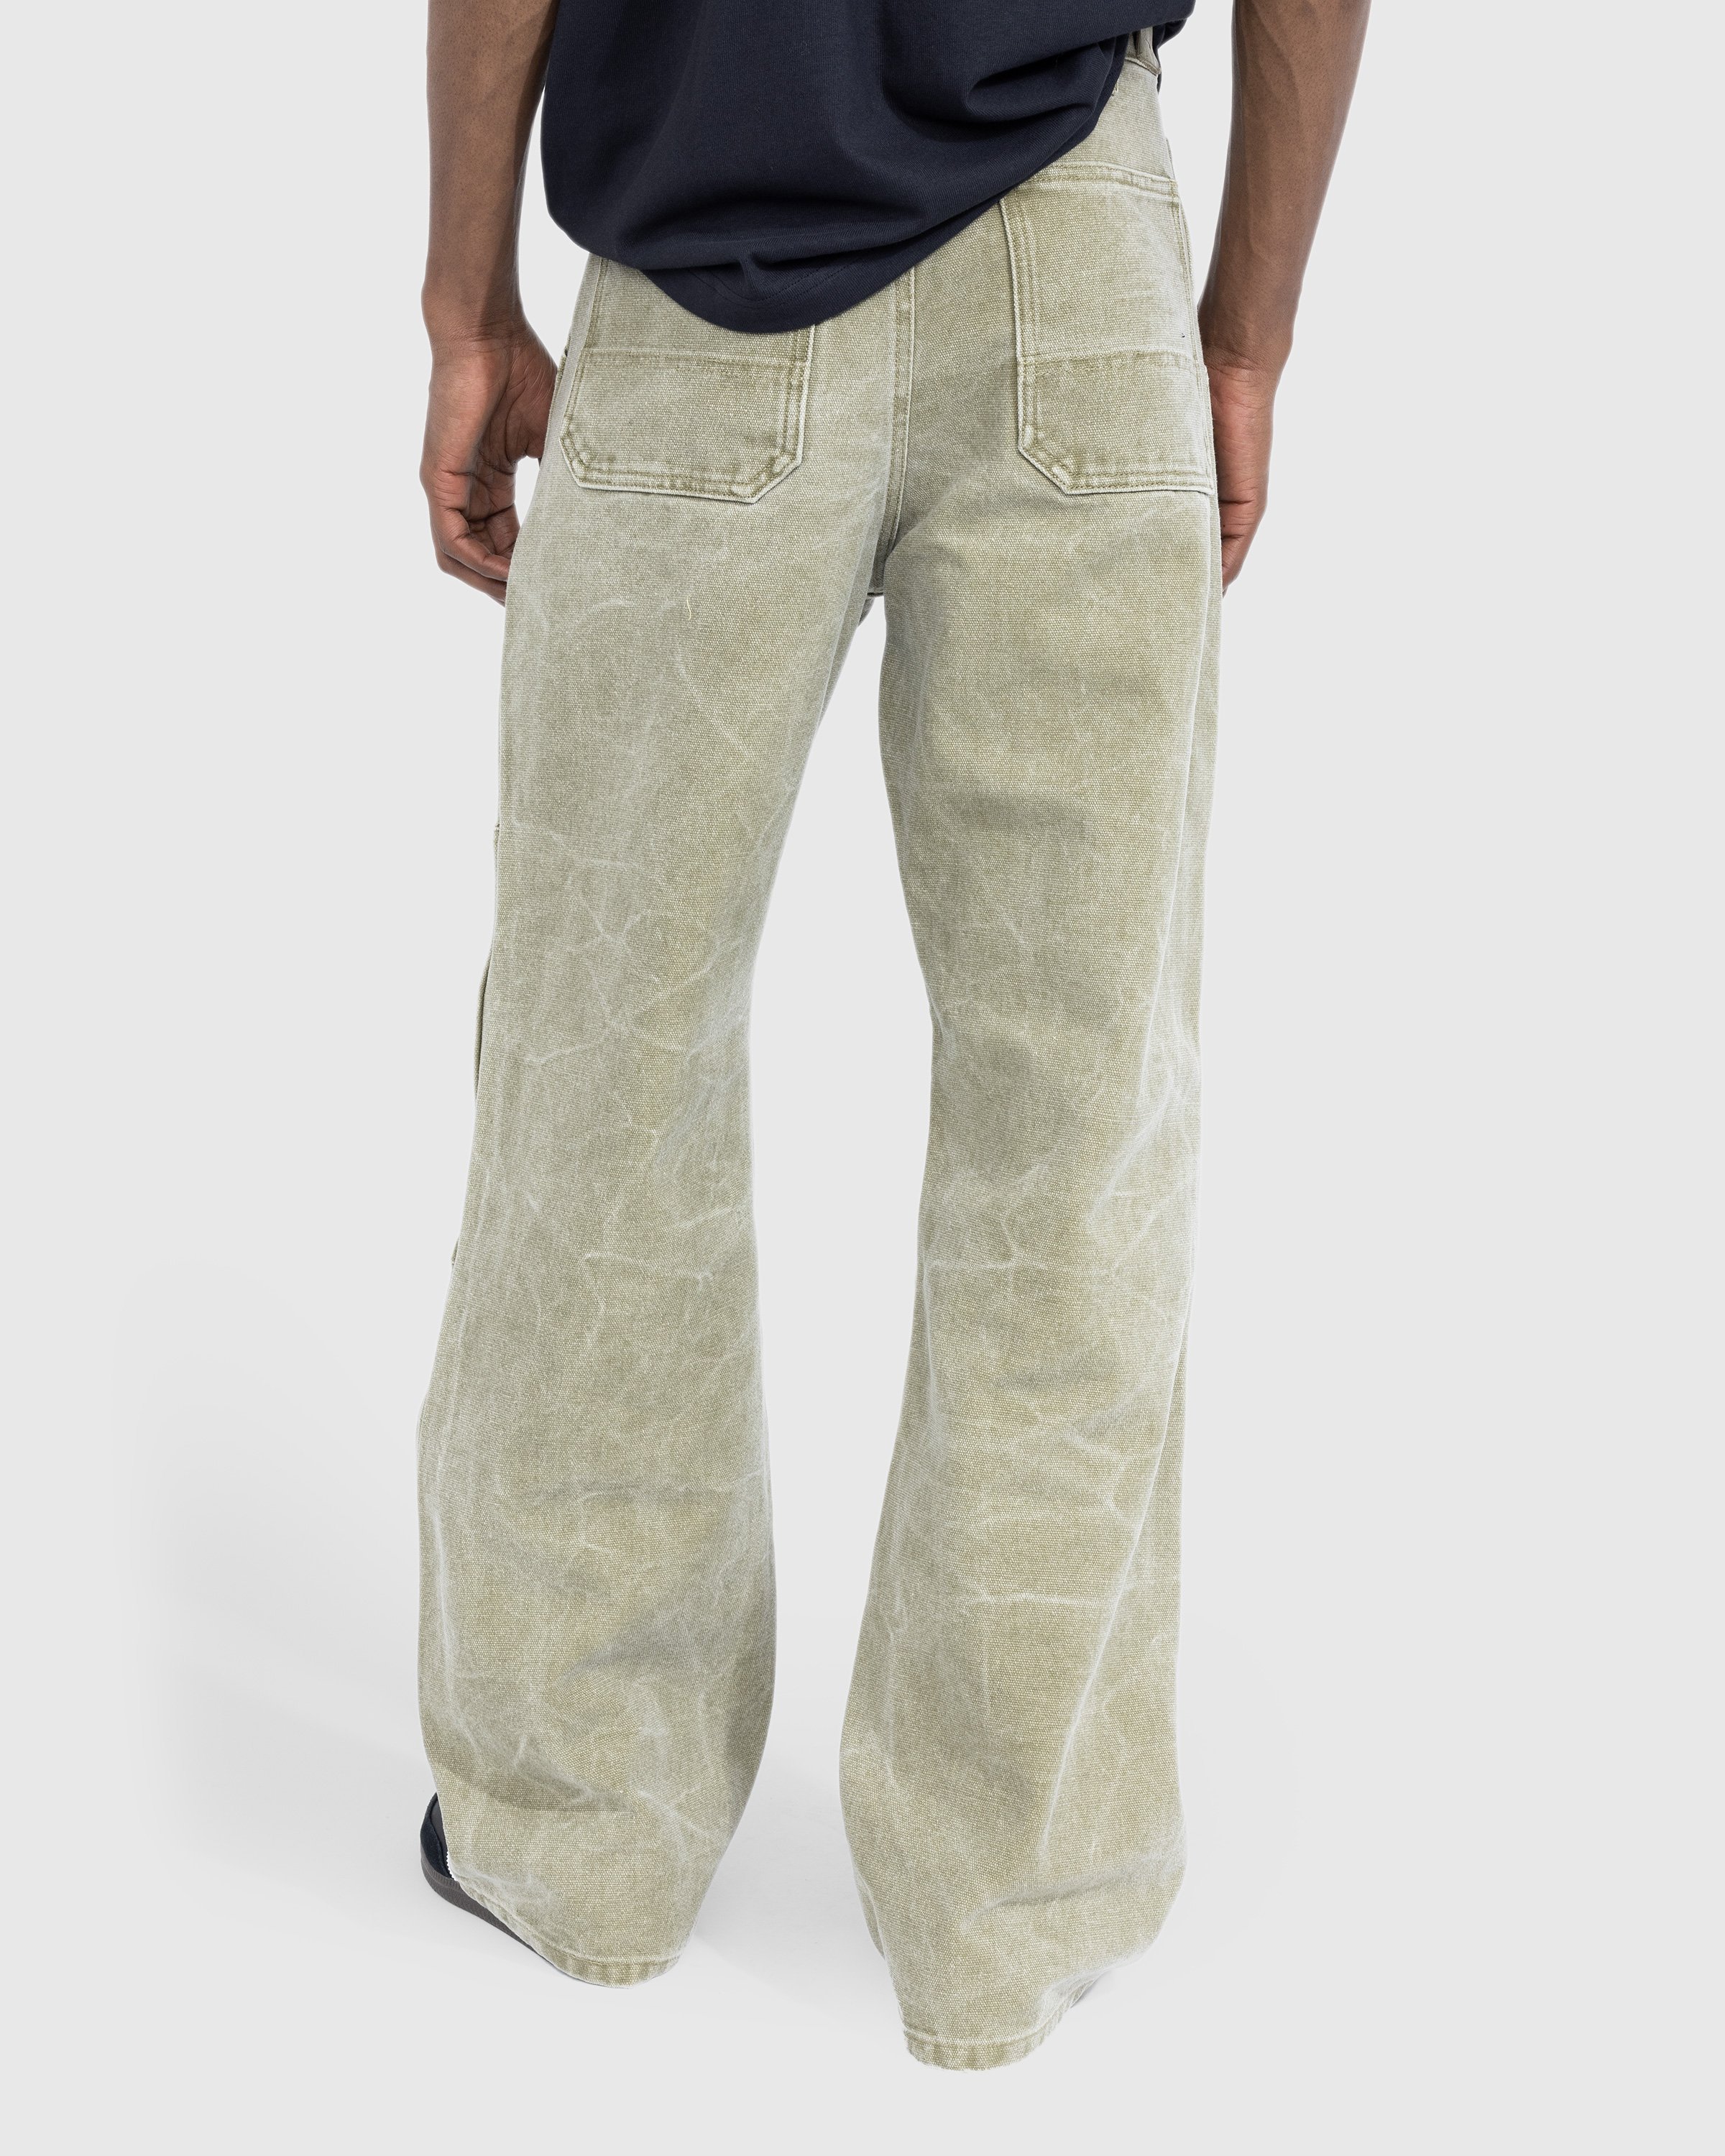 Acne Studios - Cotton Canvas Trousers Khaki Beige - Clothing - Green - Image 3